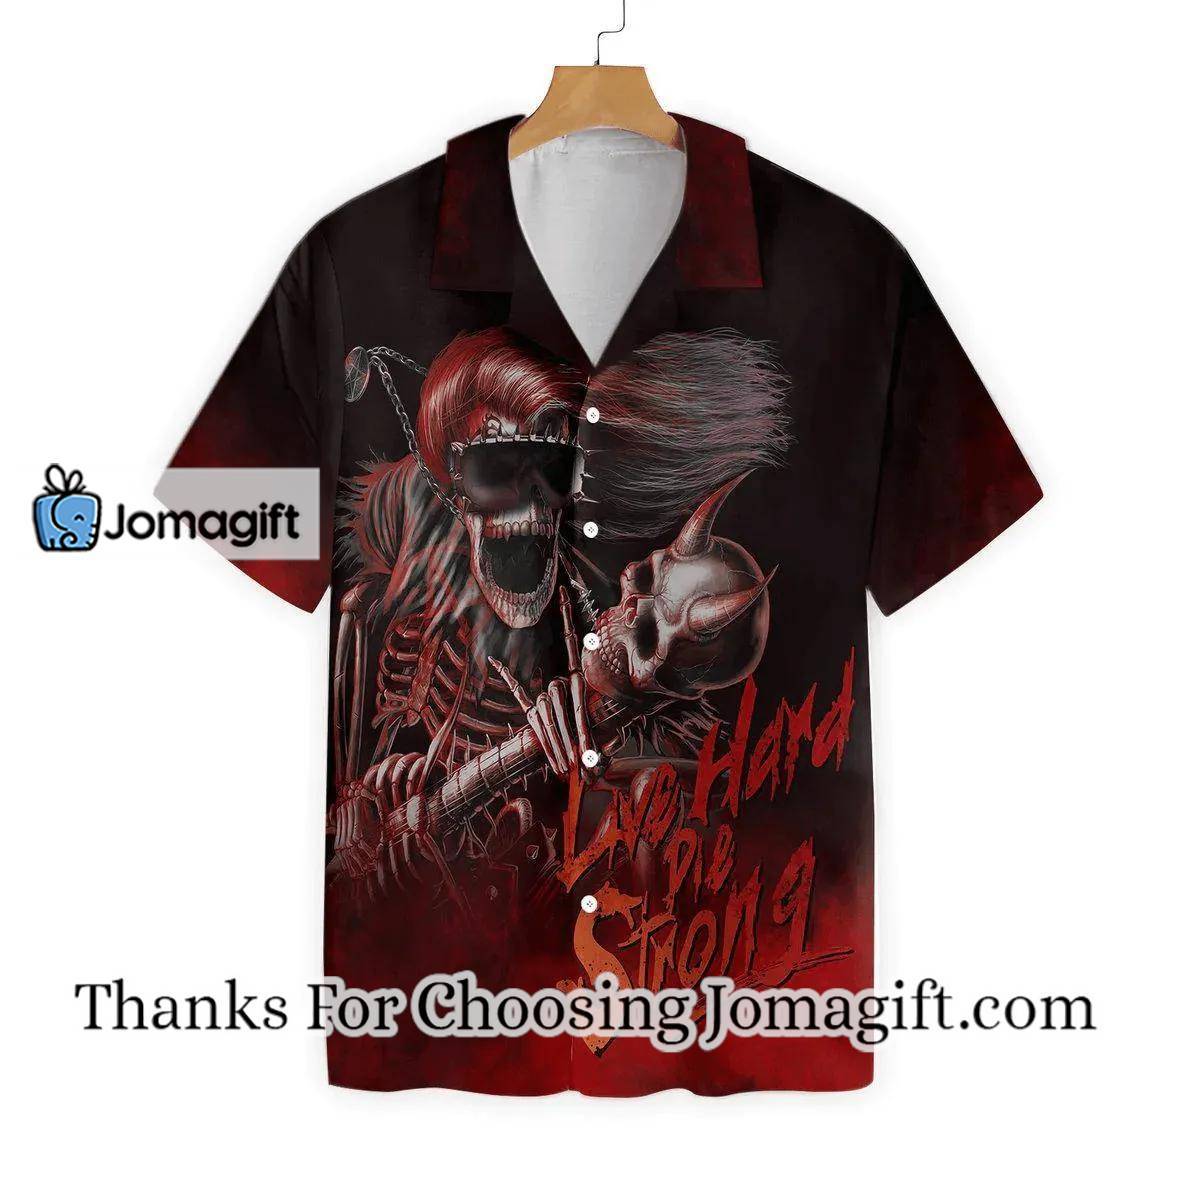 Live Hard Die Strong Burning Guitar Hawaiian Shirt HW3705 2